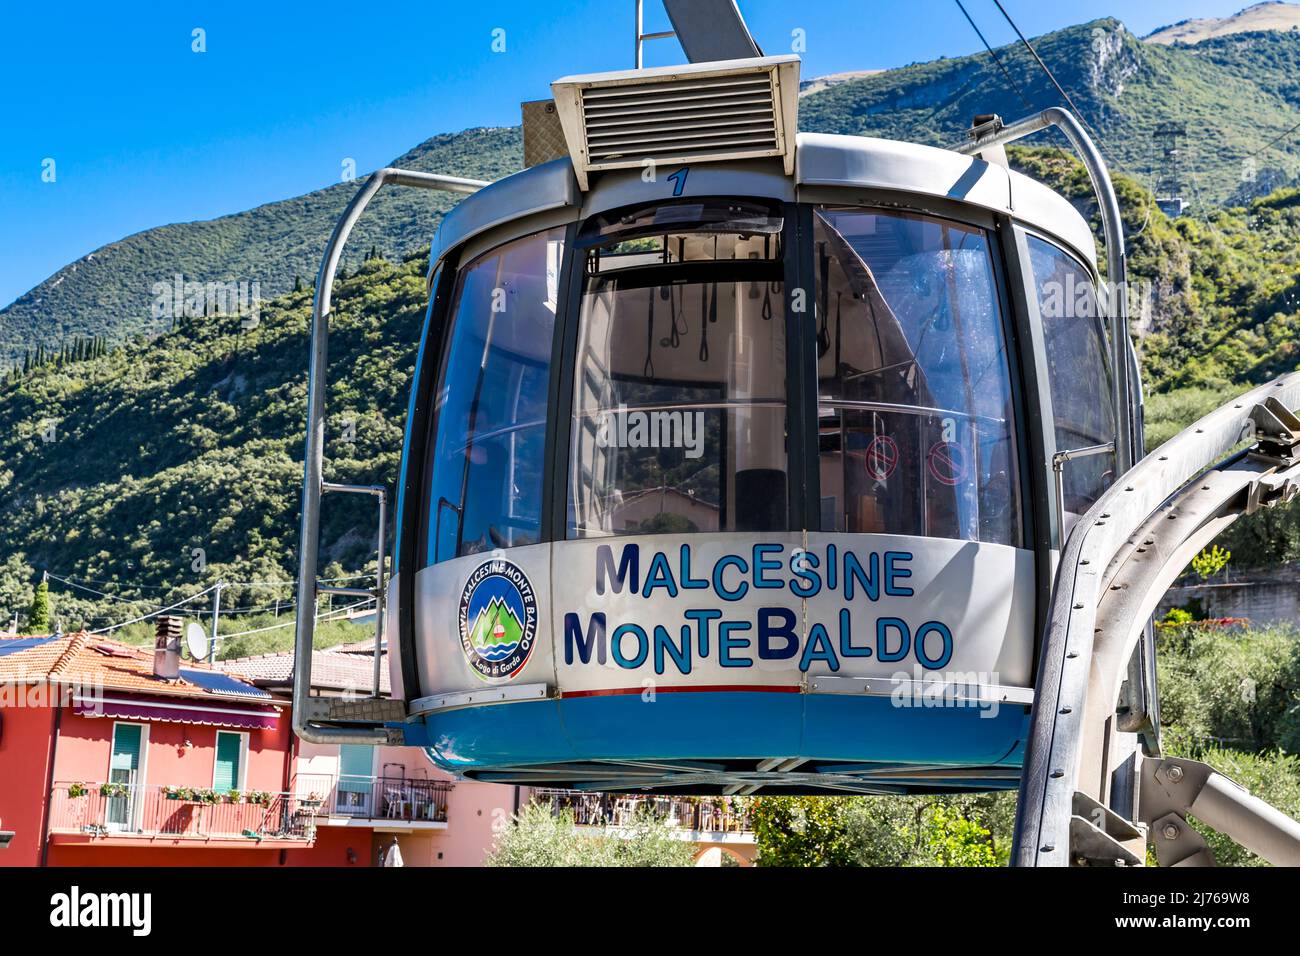 Cable car from Malcesine to Monte Baldo, Malcesine, Lake Garda, Italy,  Europe Stock Photo - Alamy